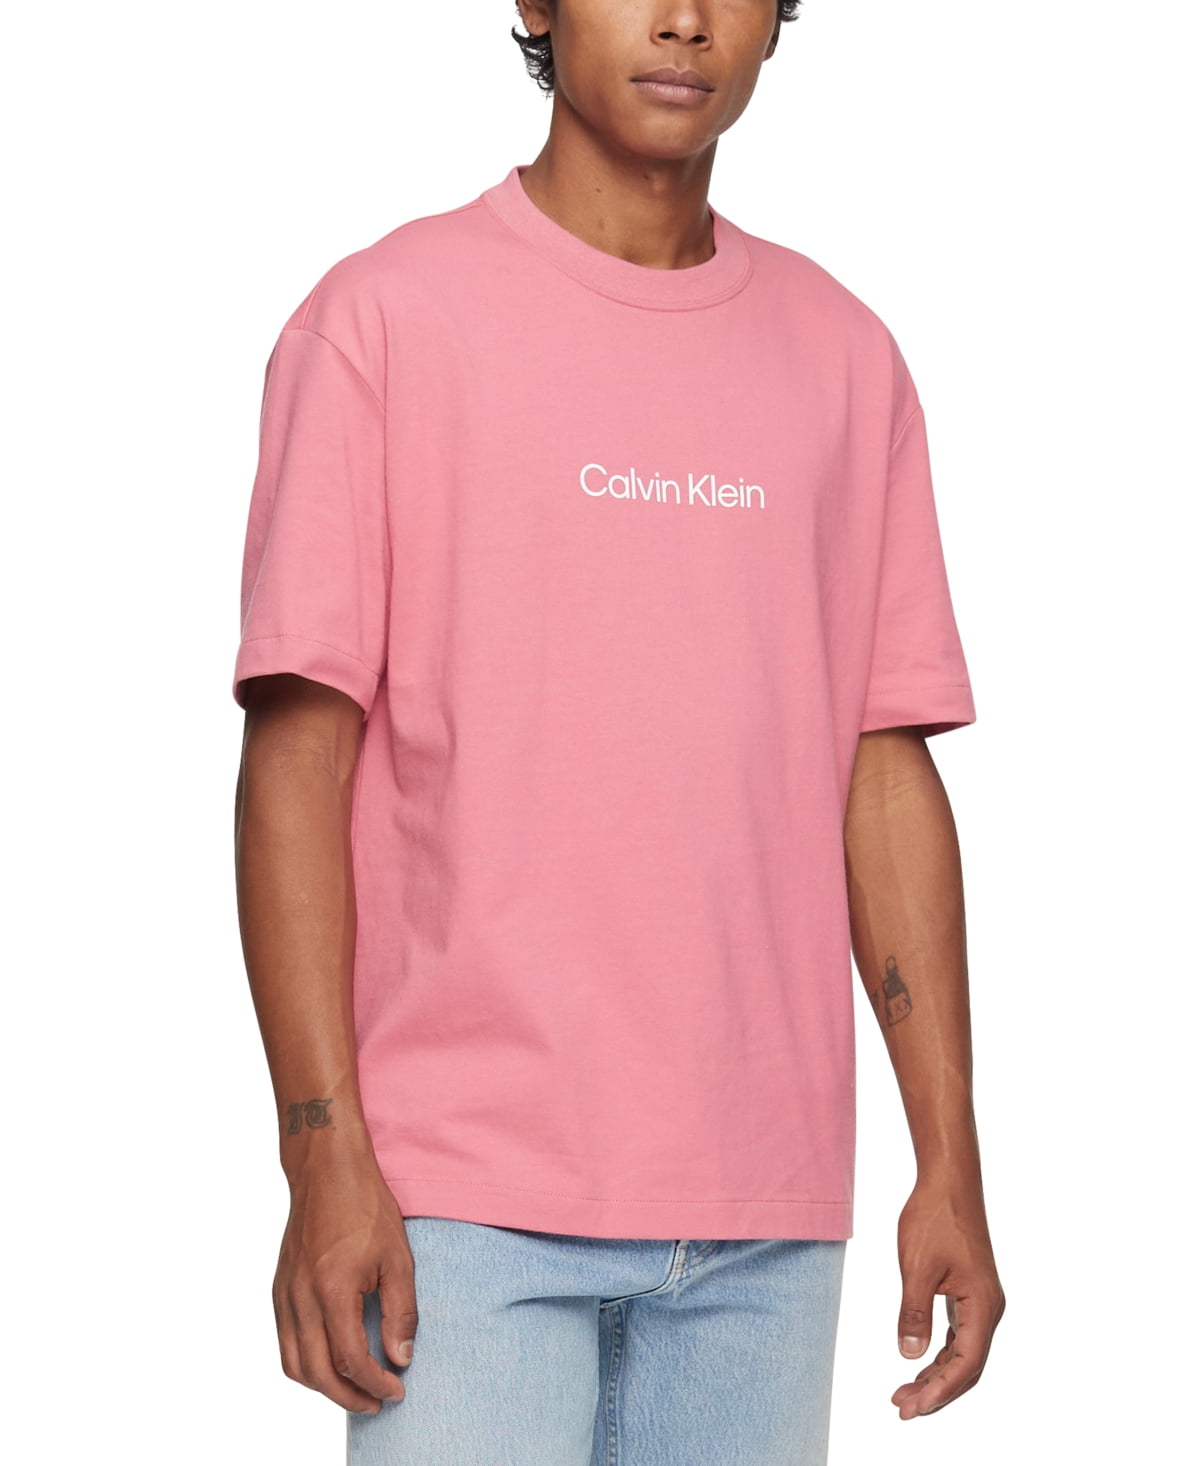 Calvin Klein Relaxed T-Shirt Logo Crewneck Size Pink Men\'s Standard Fit XX-Large